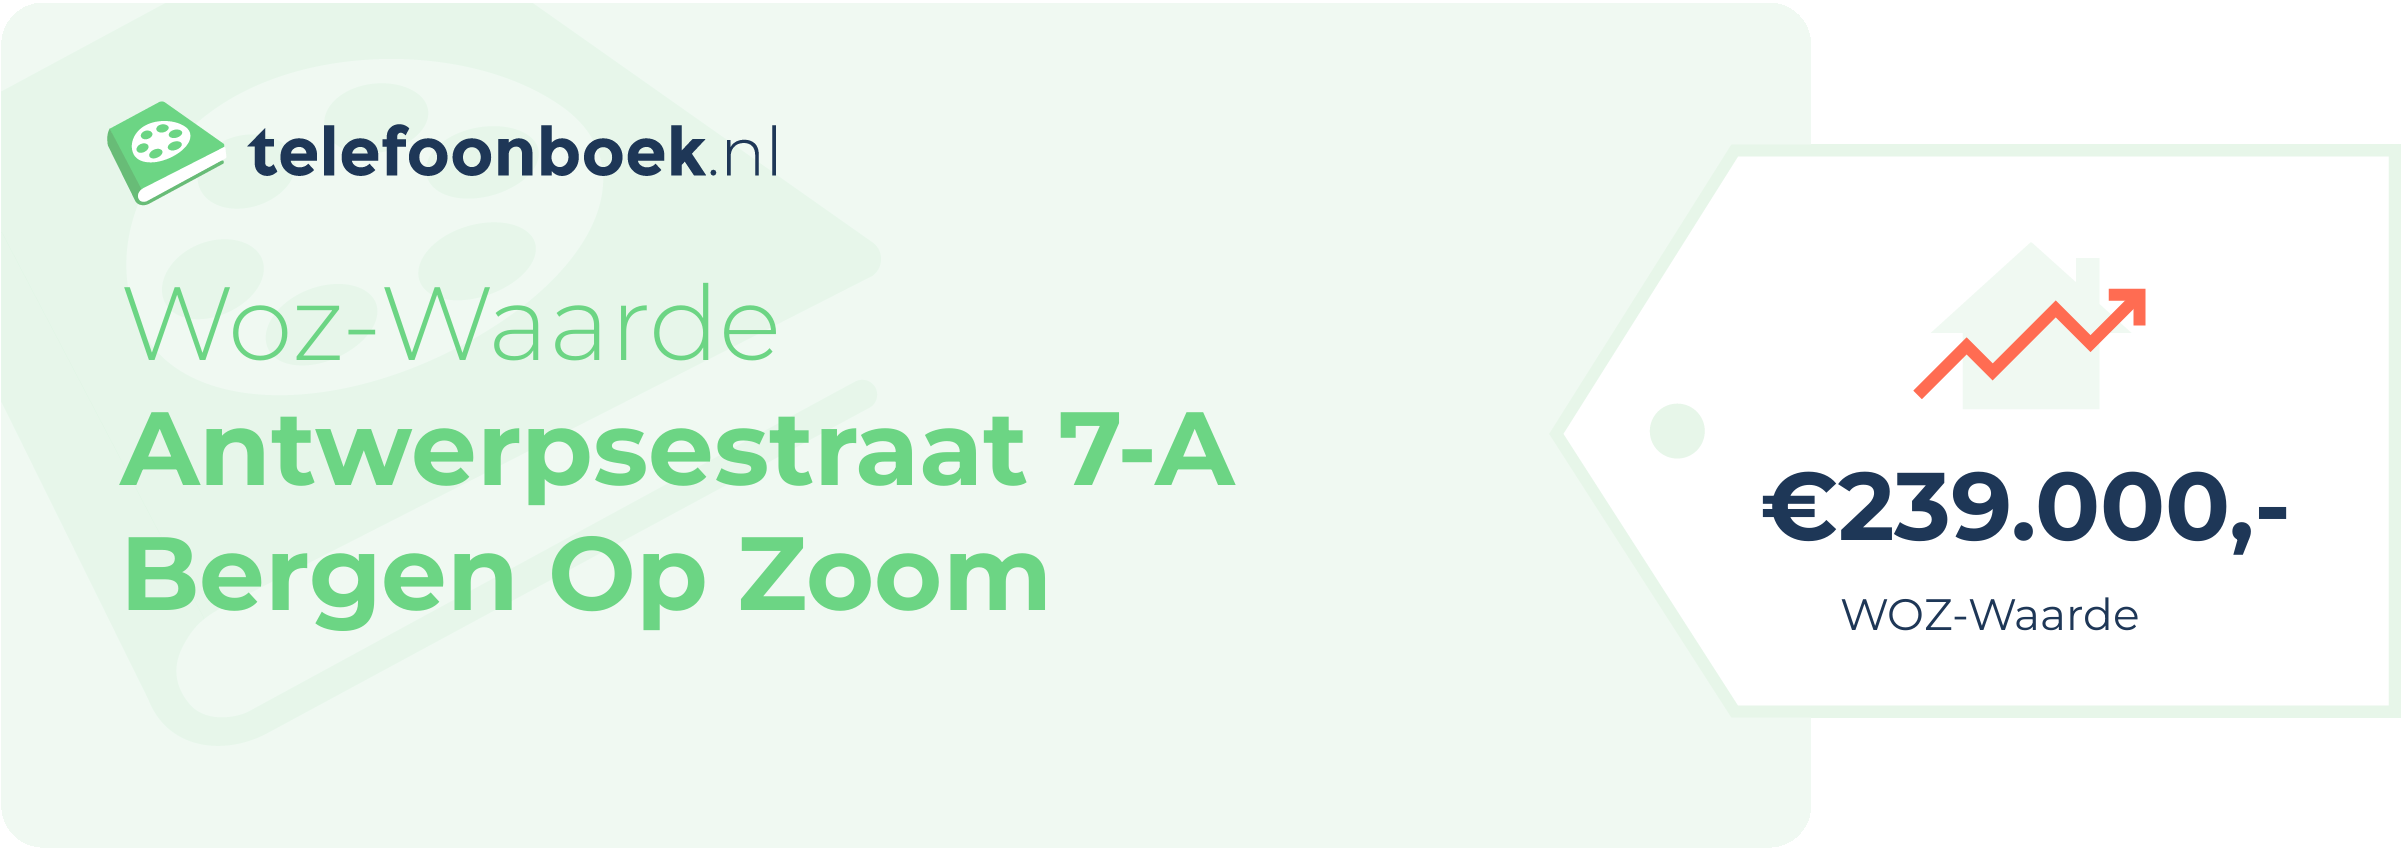 WOZ-waarde Antwerpsestraat 7-A Bergen Op Zoom